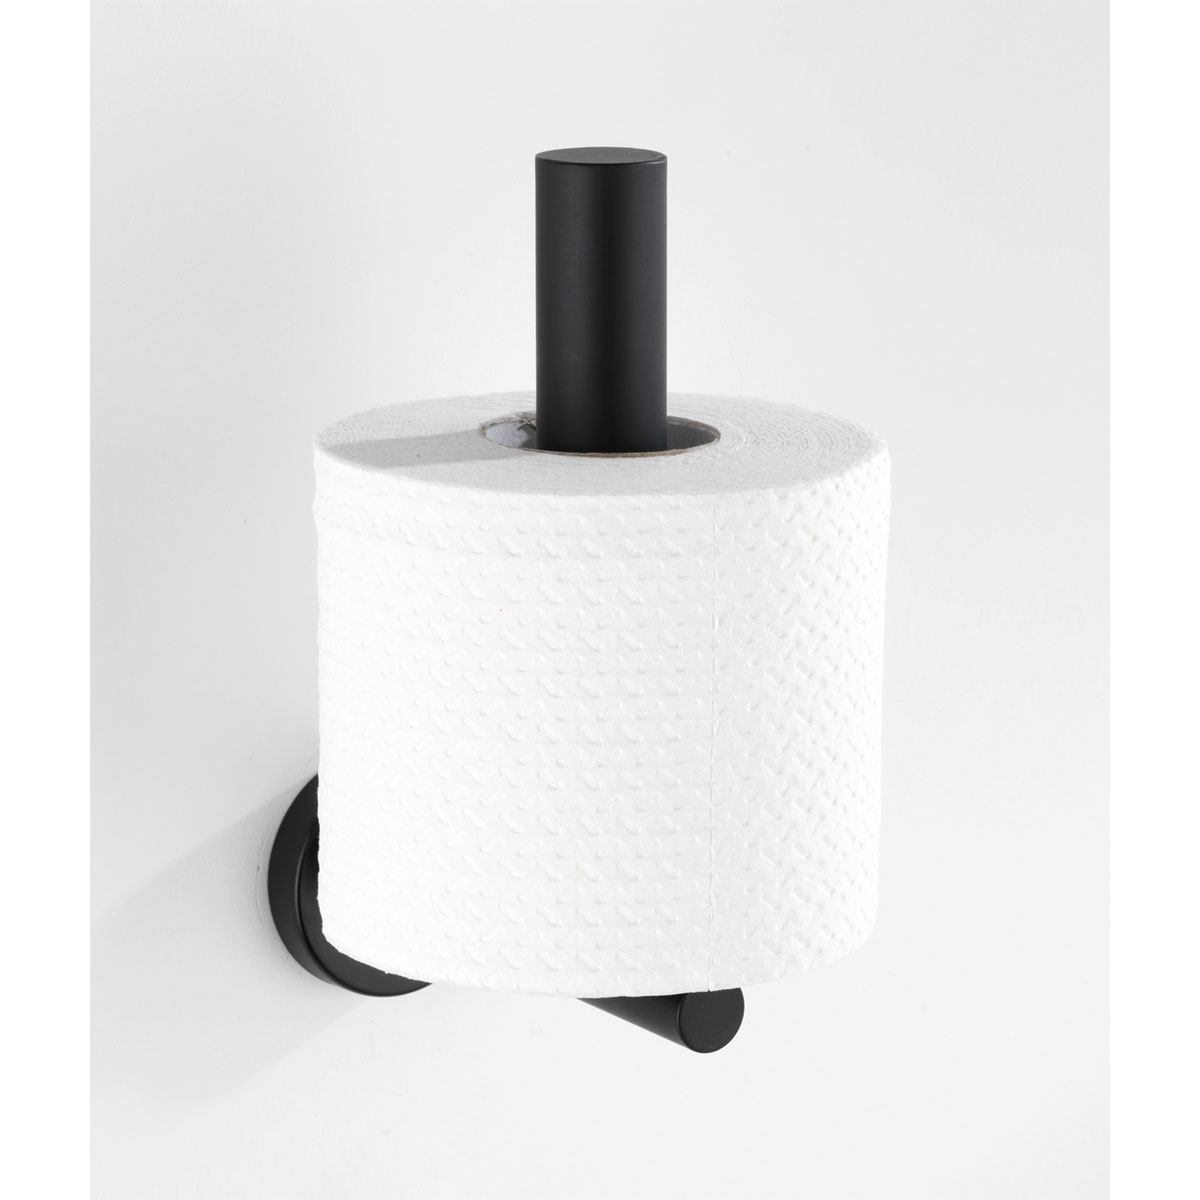 Toilettenpapier-Ersatzrollenhalter „Bosio“, schwarz